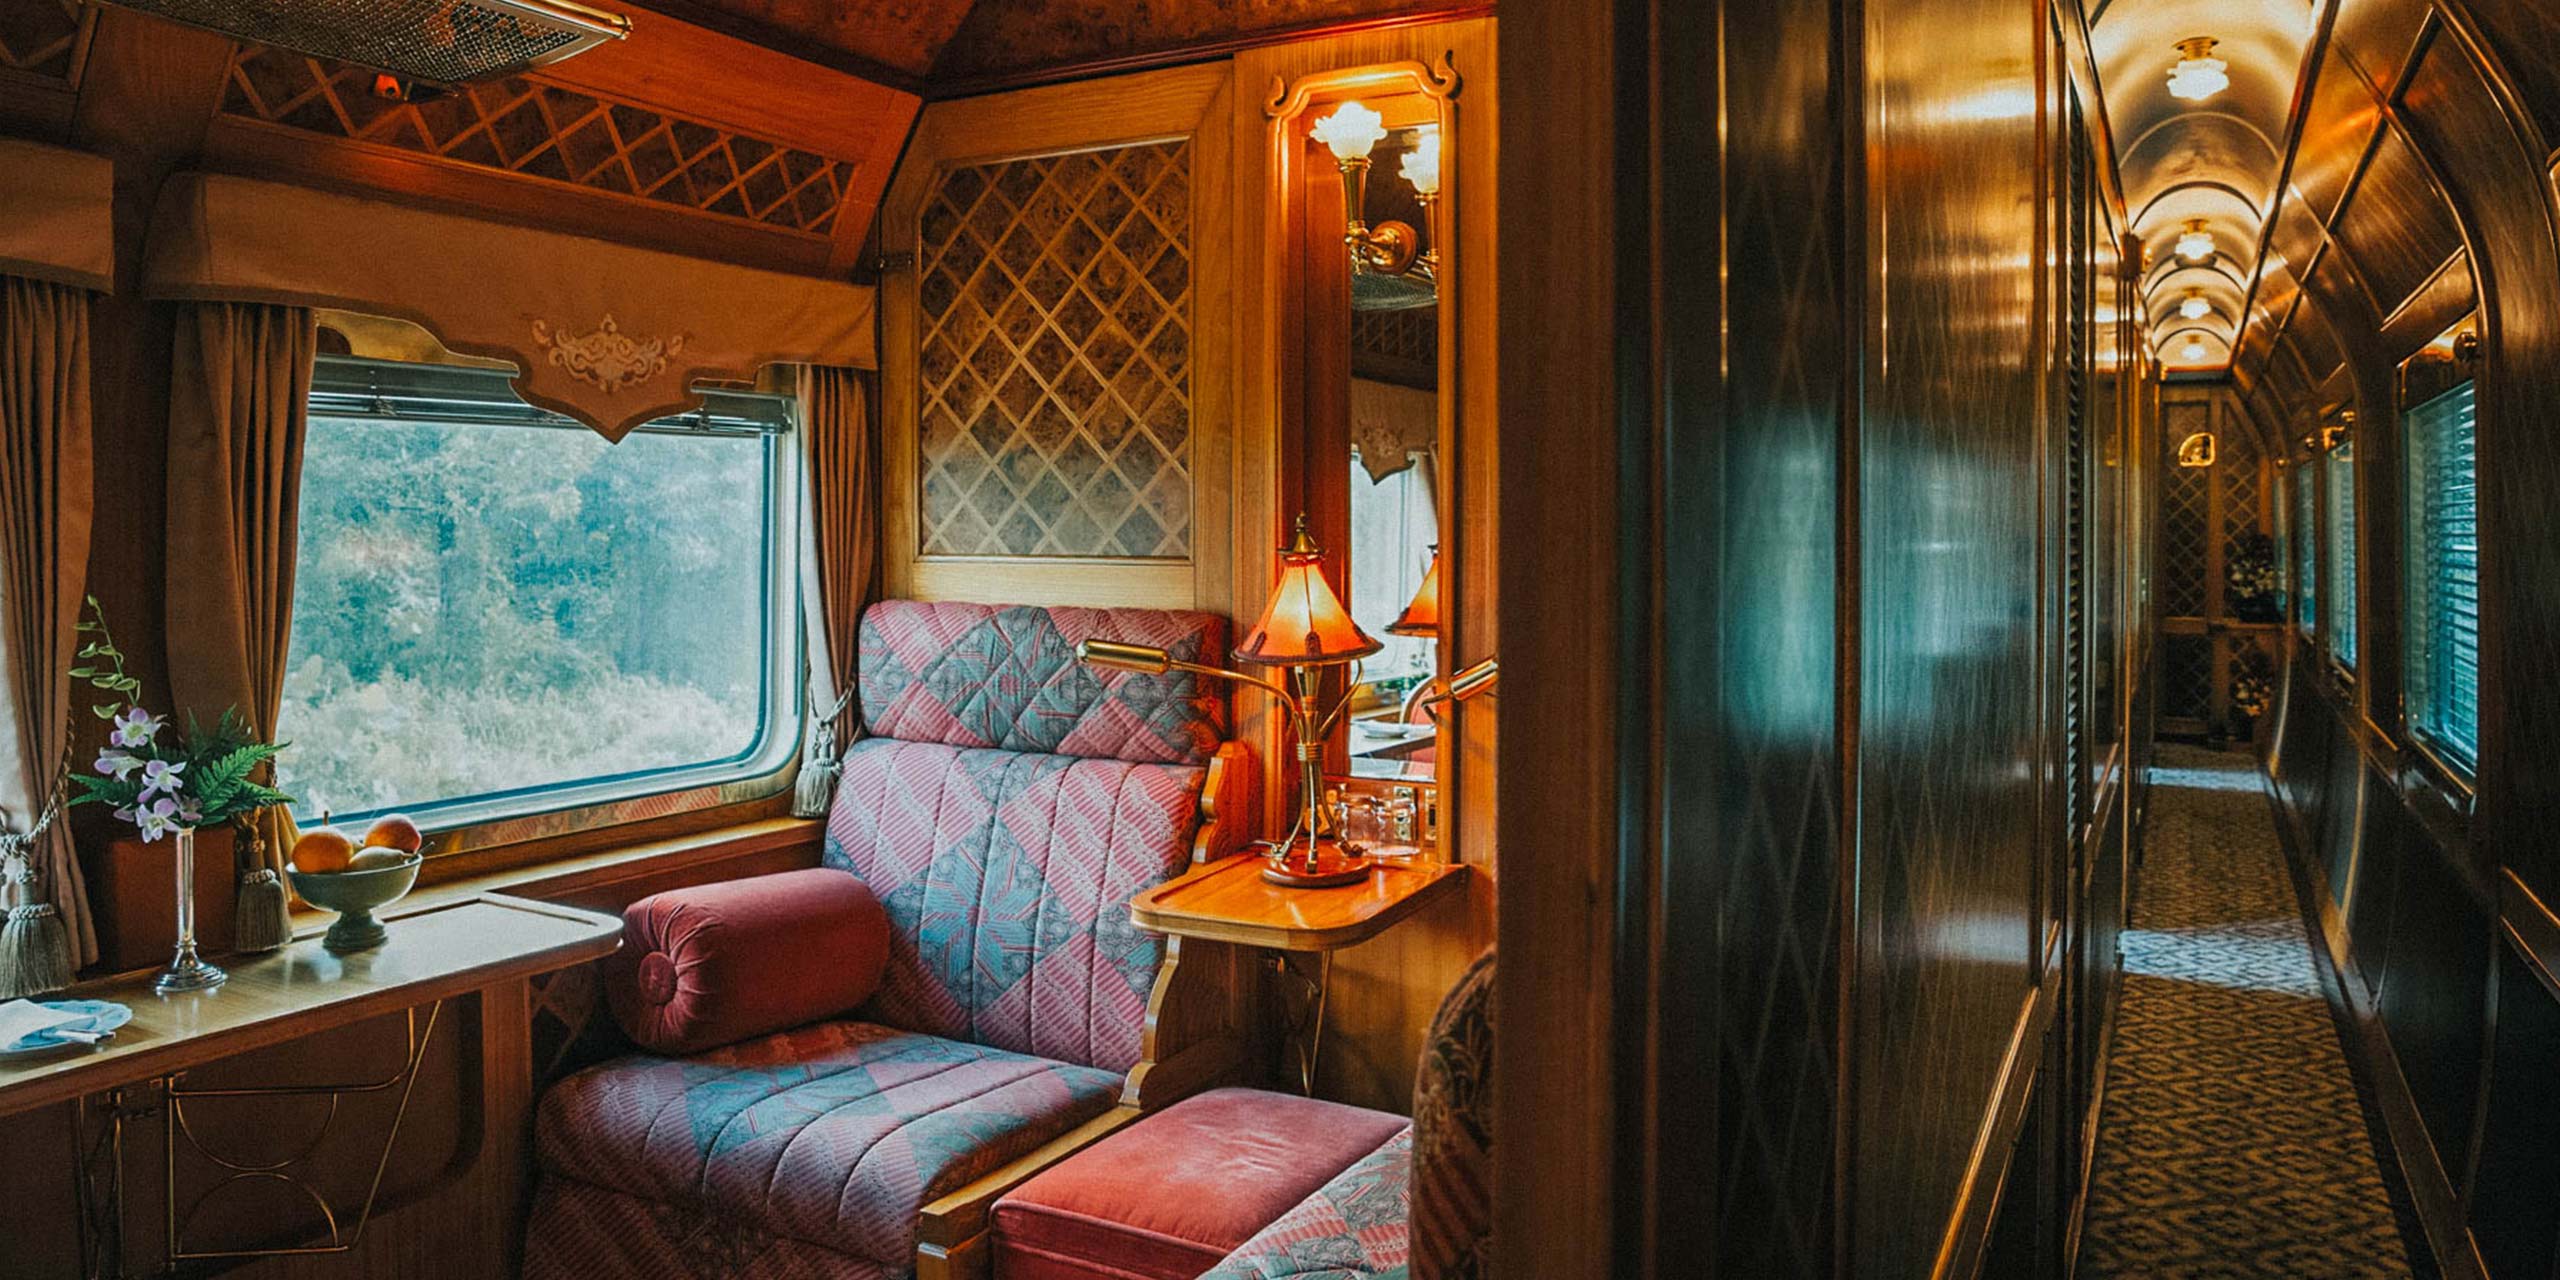 Orient Express exhibit: Height of glamor, romance on rails